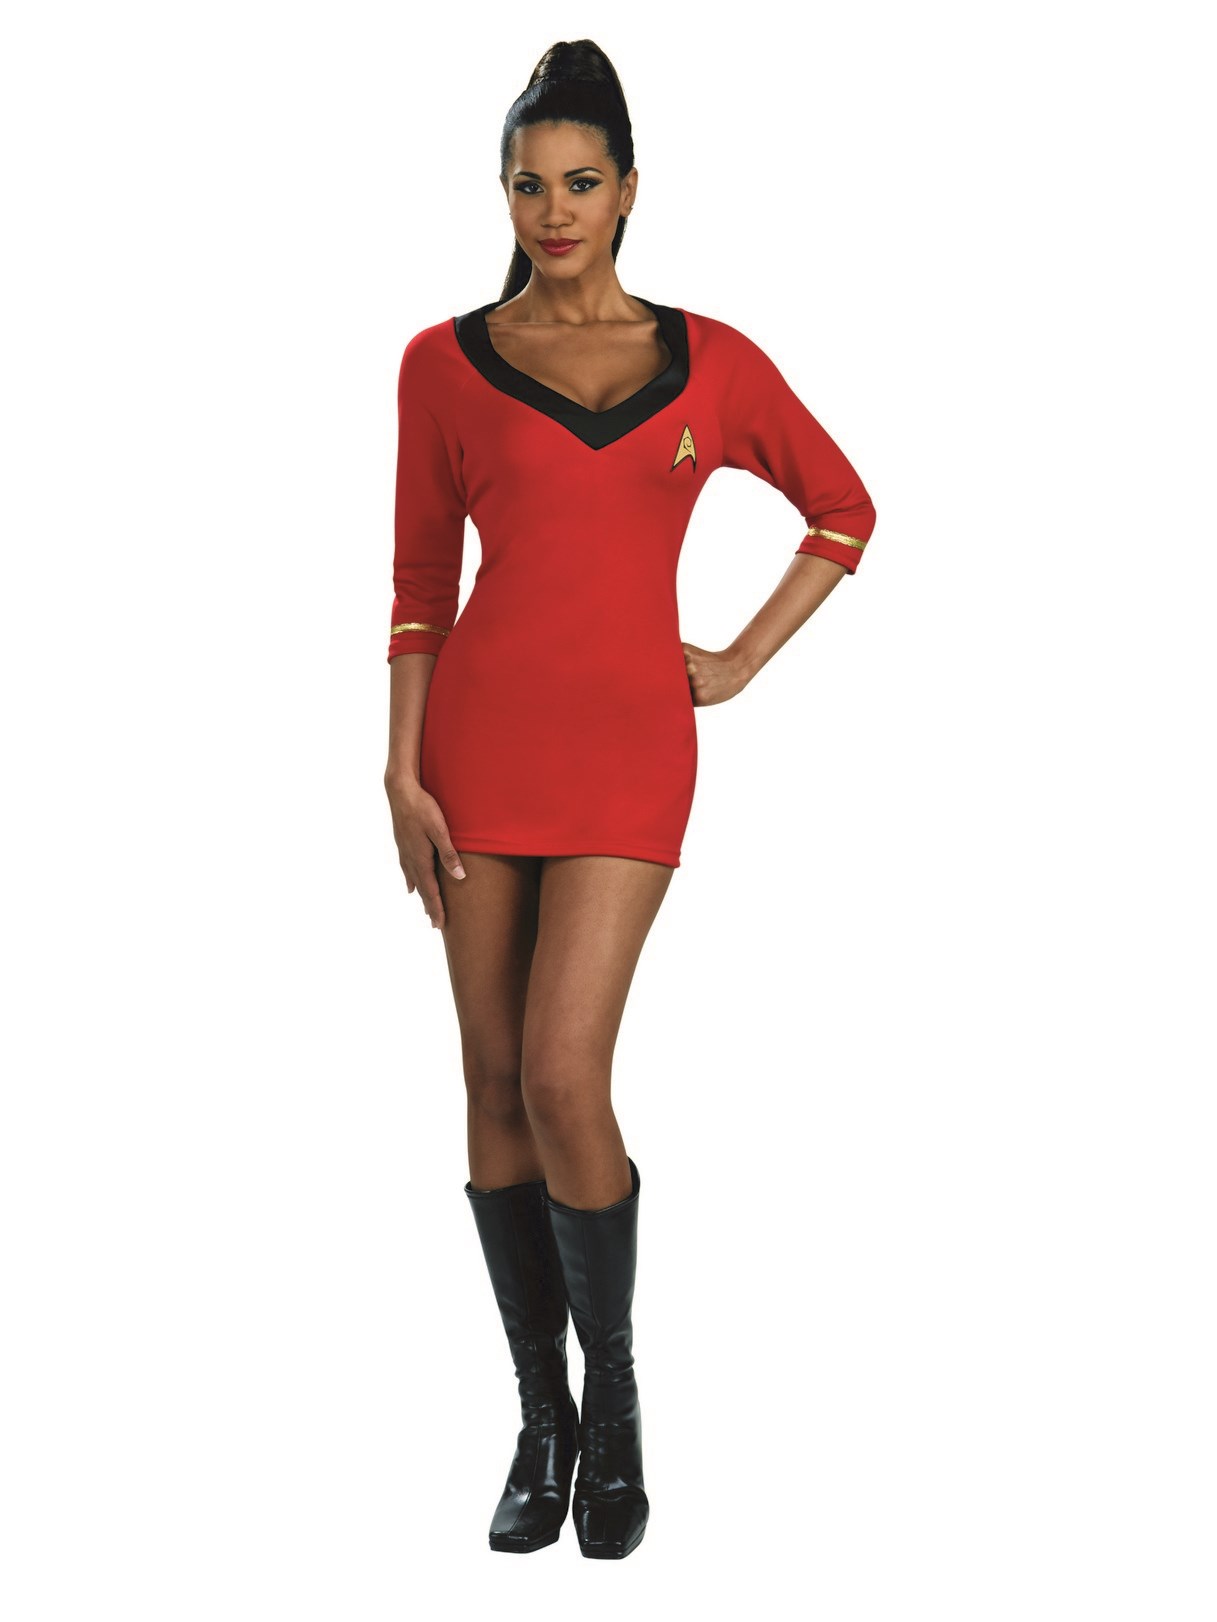 Star Trek Secret Wishes Red Dress